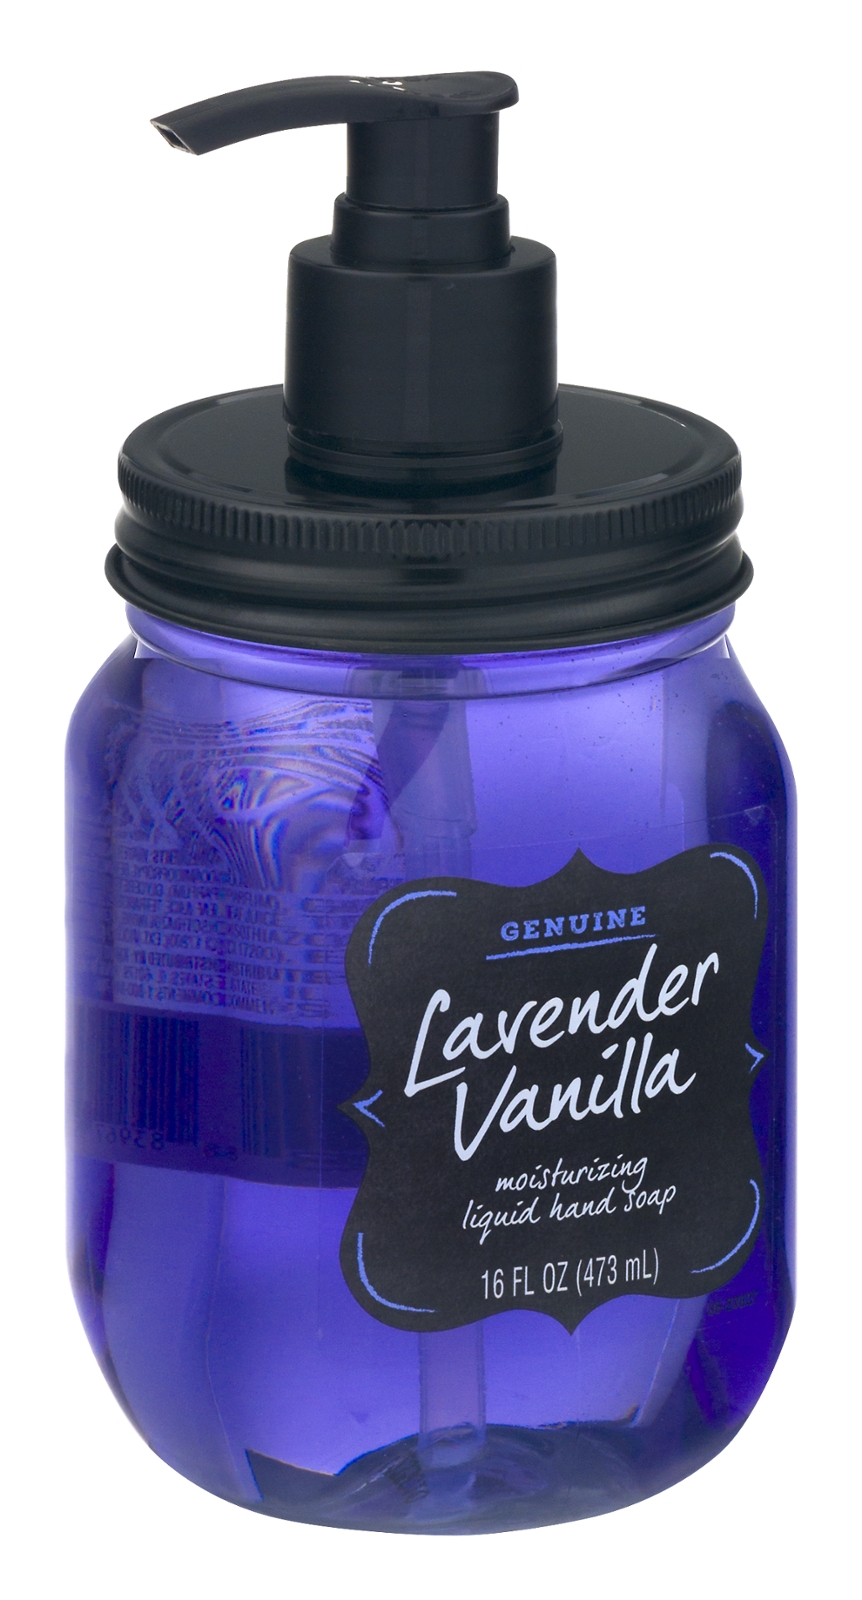 GENUINE Lavender Vanilla Moisturizing Liquid Hand Soap 16.0 FL OZ